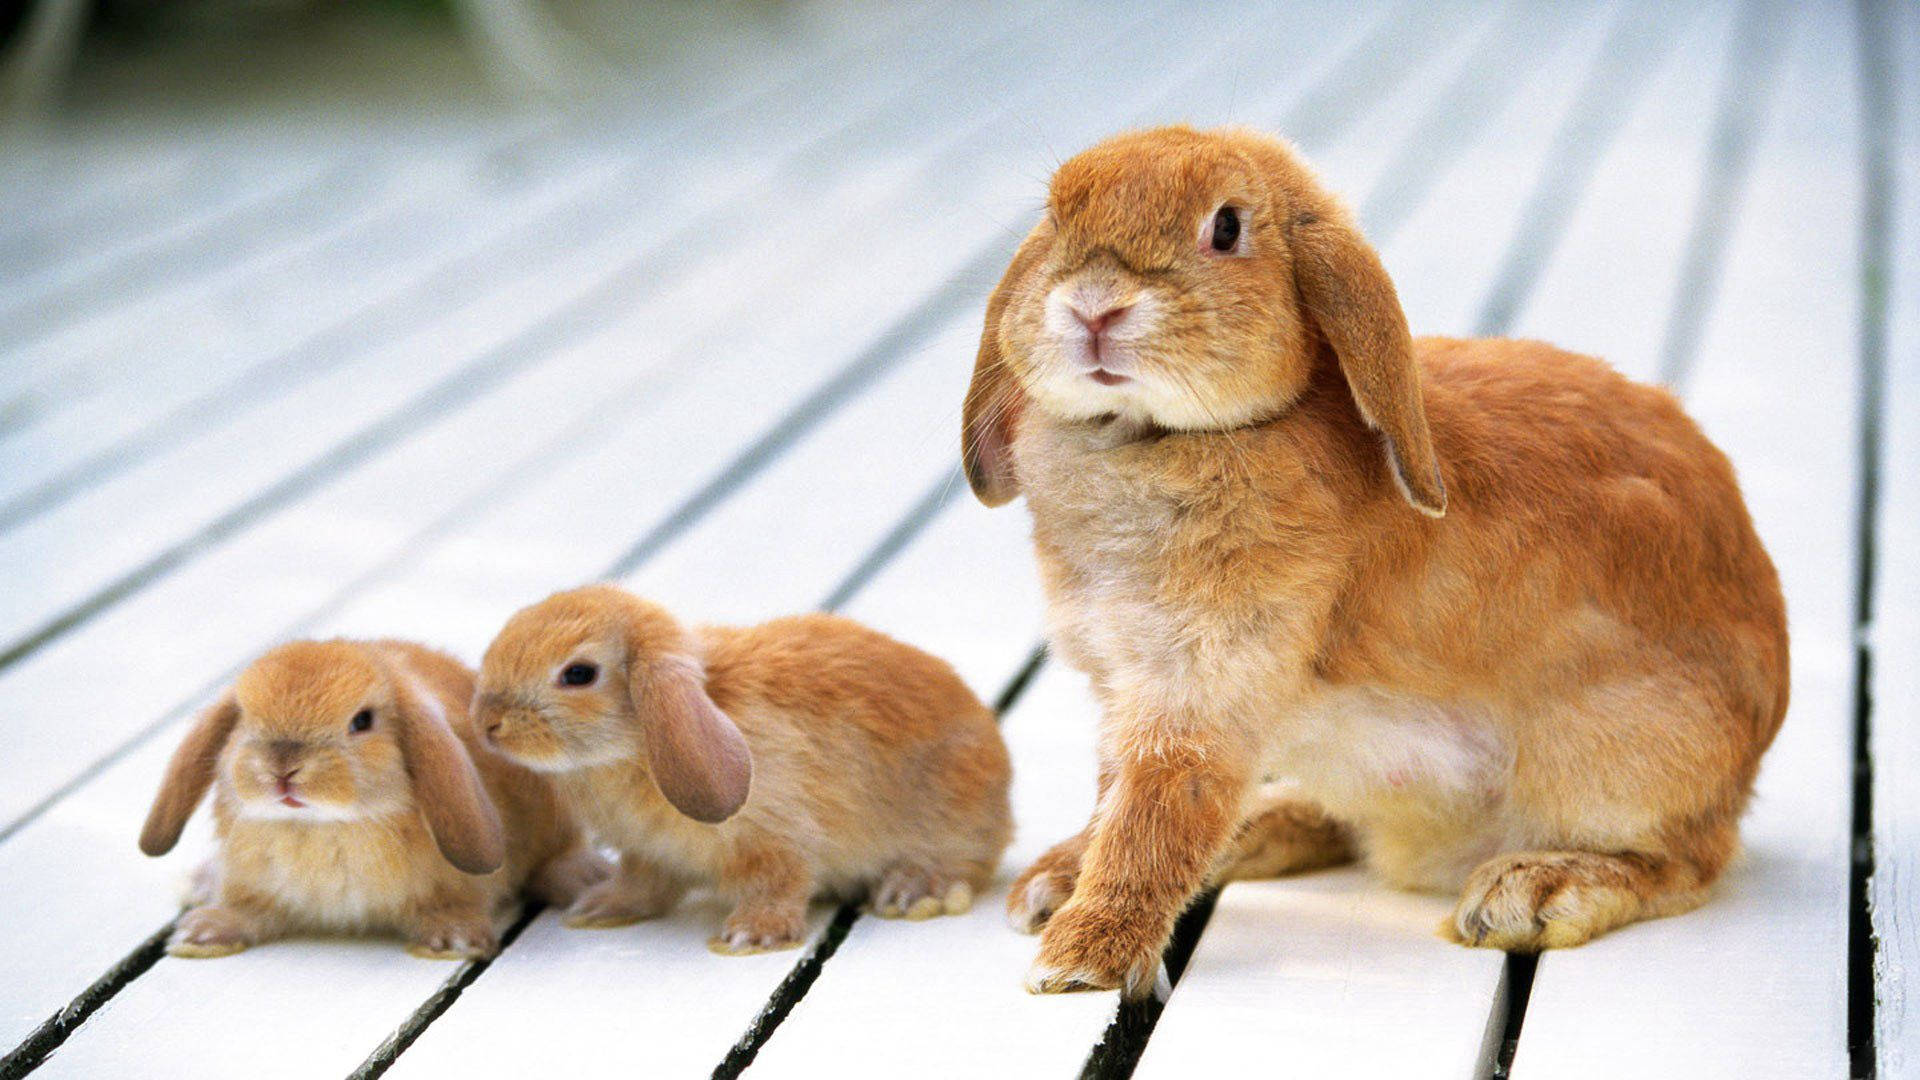 Rabbit Family On The Floor